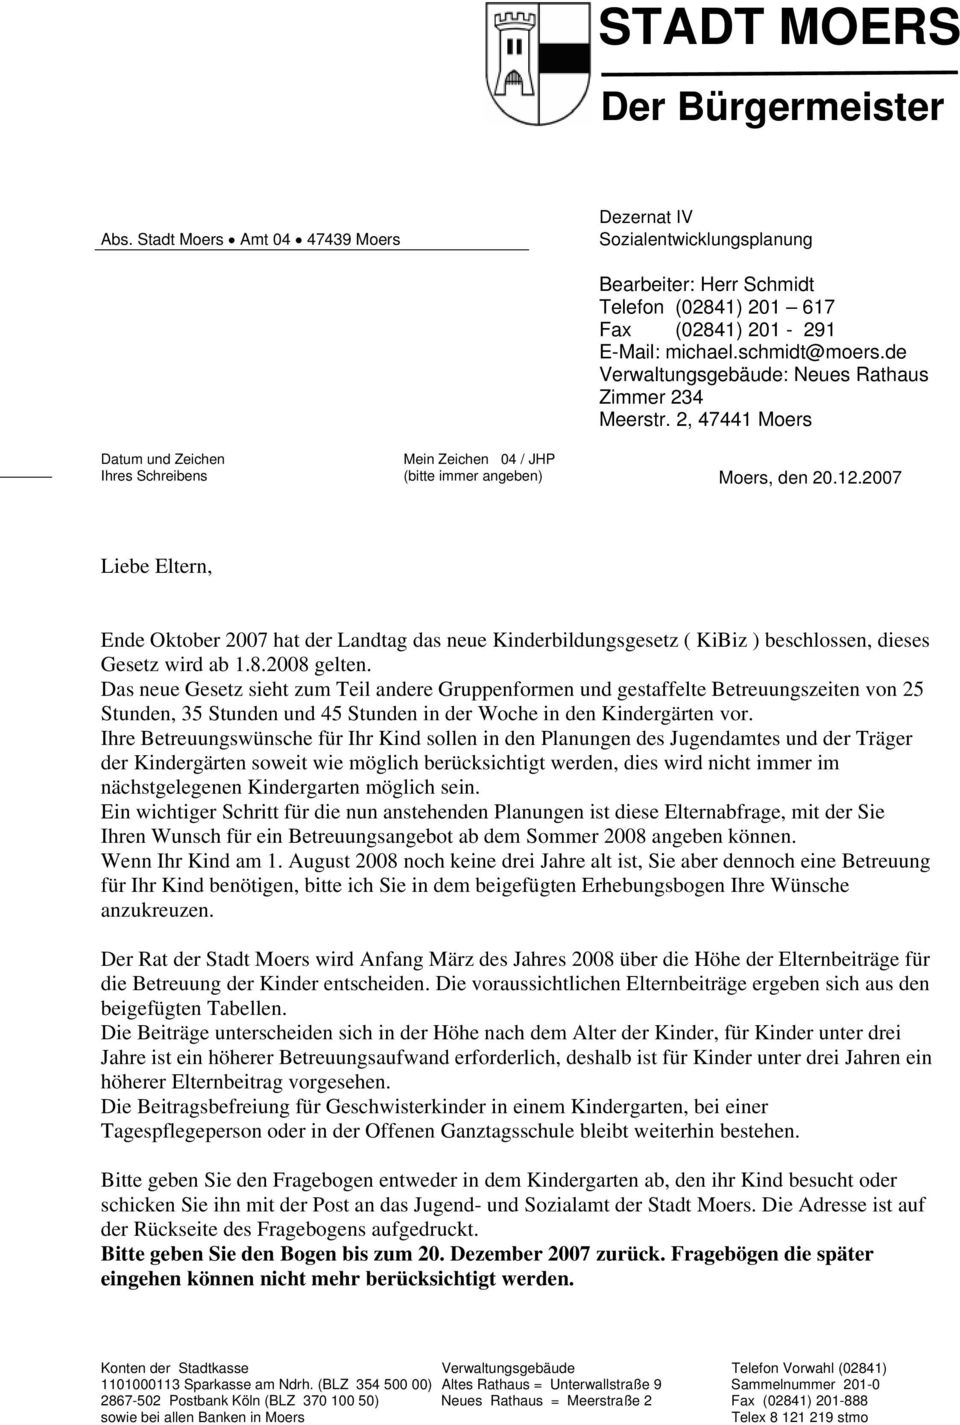 Fax (02841) 201-291 E-Mail: michael.schmidt@moers.de Verwaltungsgebäude: Neues Rathaus Zimmer 234 Meerstr. 2, 47441 Moers Moers, den 20.12.